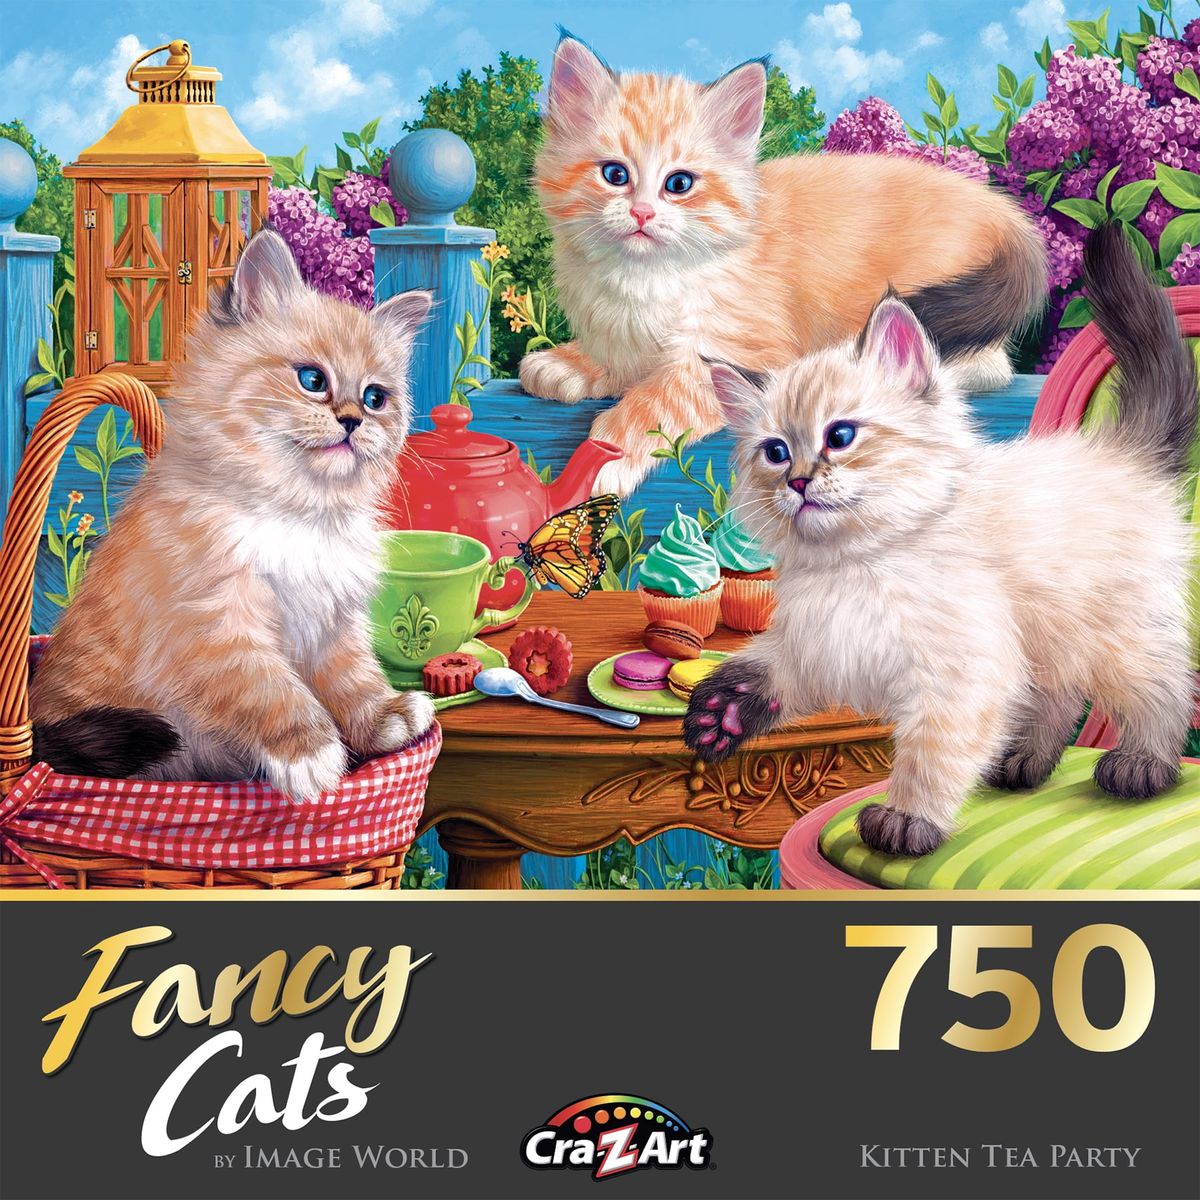 [RDY] [送料無料] Cra-Z-Art ファンシー・キャッツ 750ピース 子猫のティーパーティー・ジグソーパズル [楽天海外通販] | Cra-Z-Art Fancy Cats 750-Piece Kitten Tea Party Jigsaw Puzzle画像